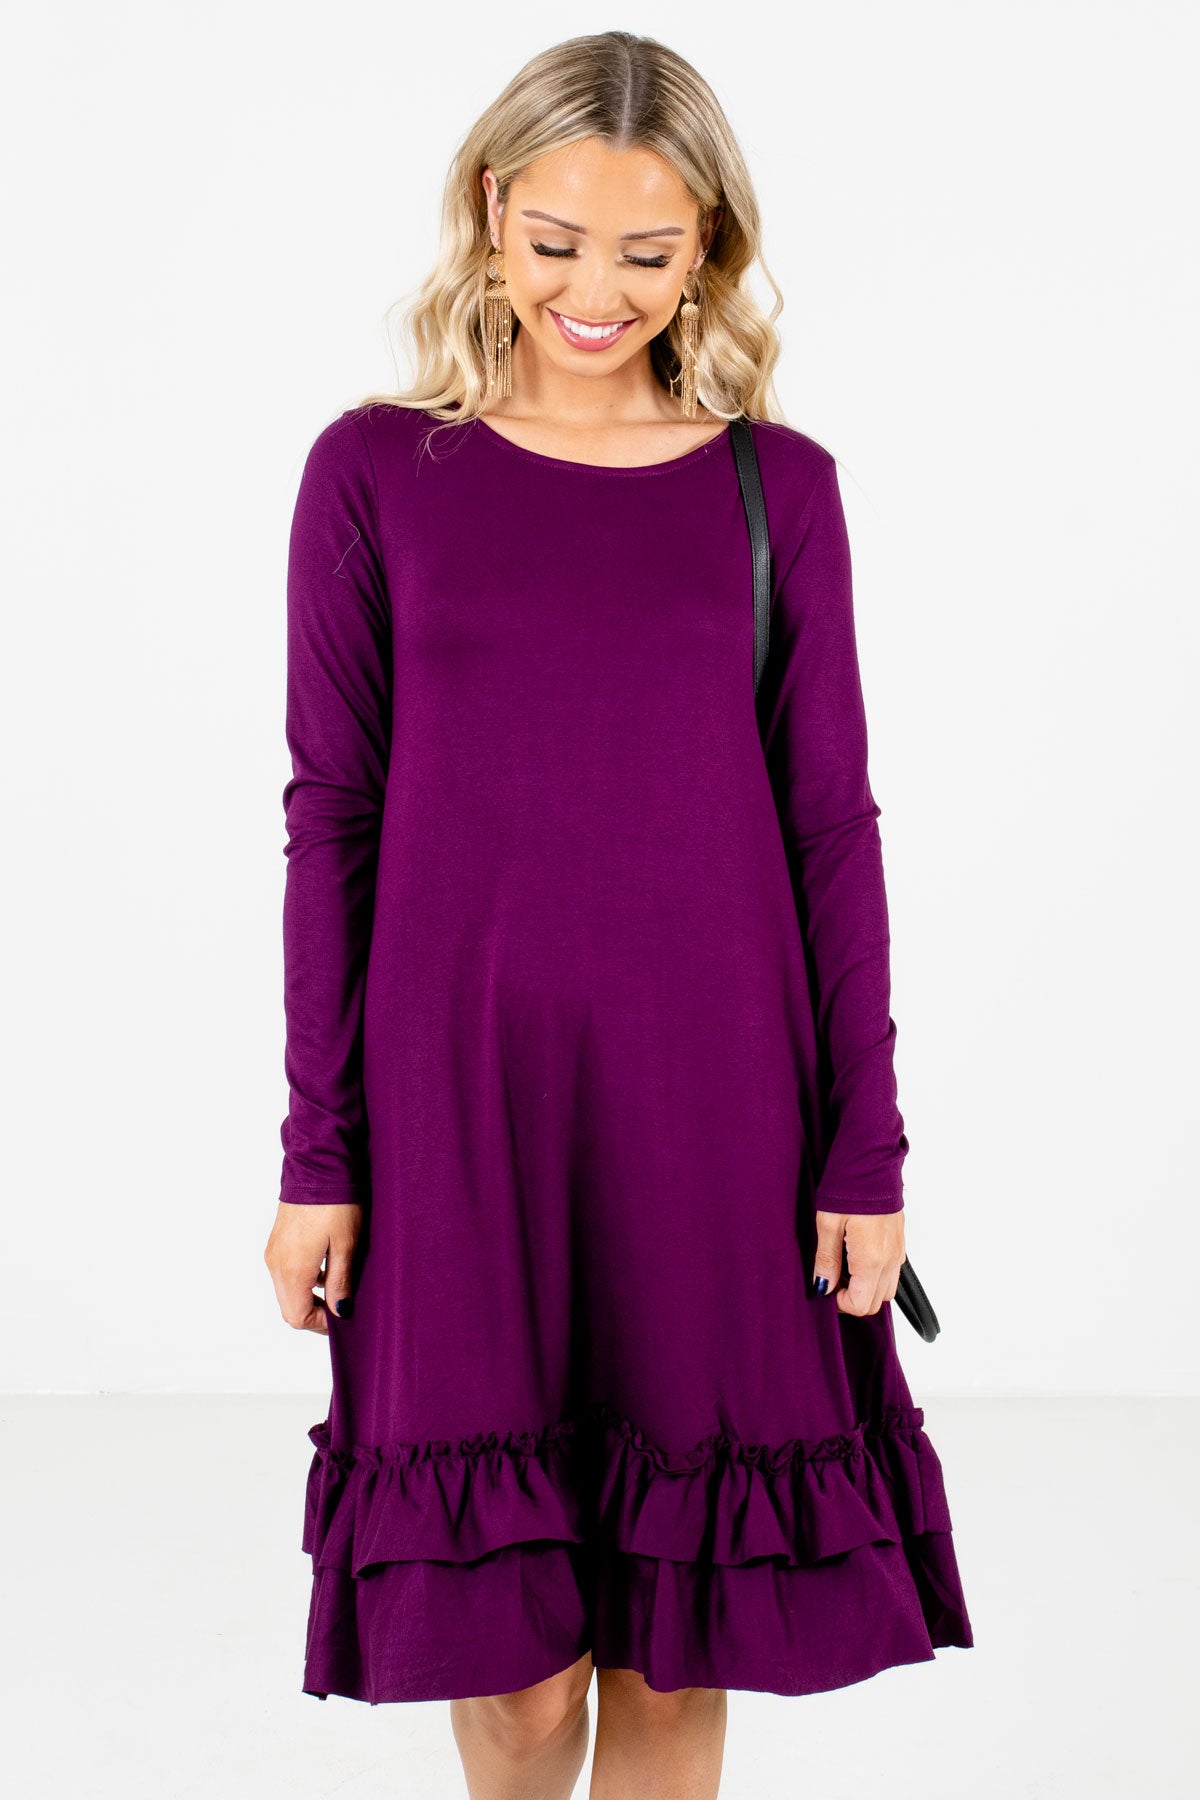 Women's Purple Boutique Knee-Length Dresses with Pockets